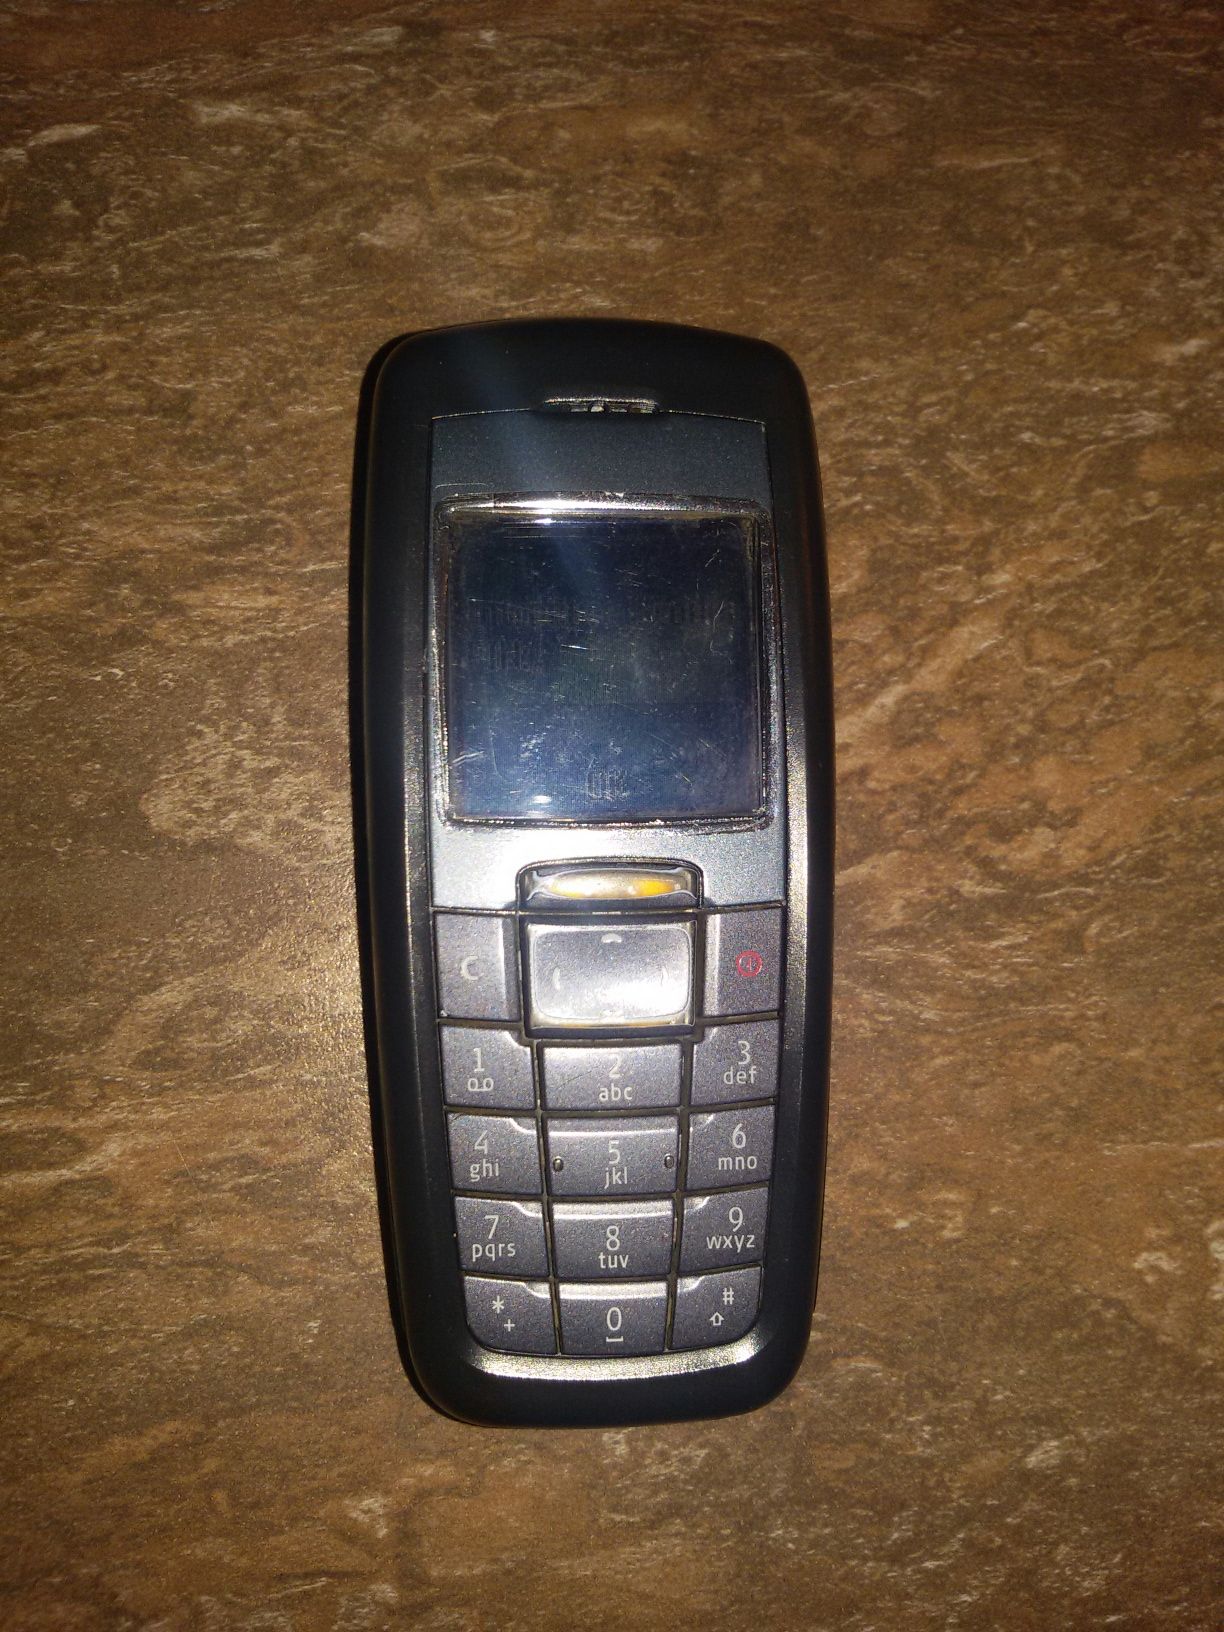 Telefon Nokia 2600